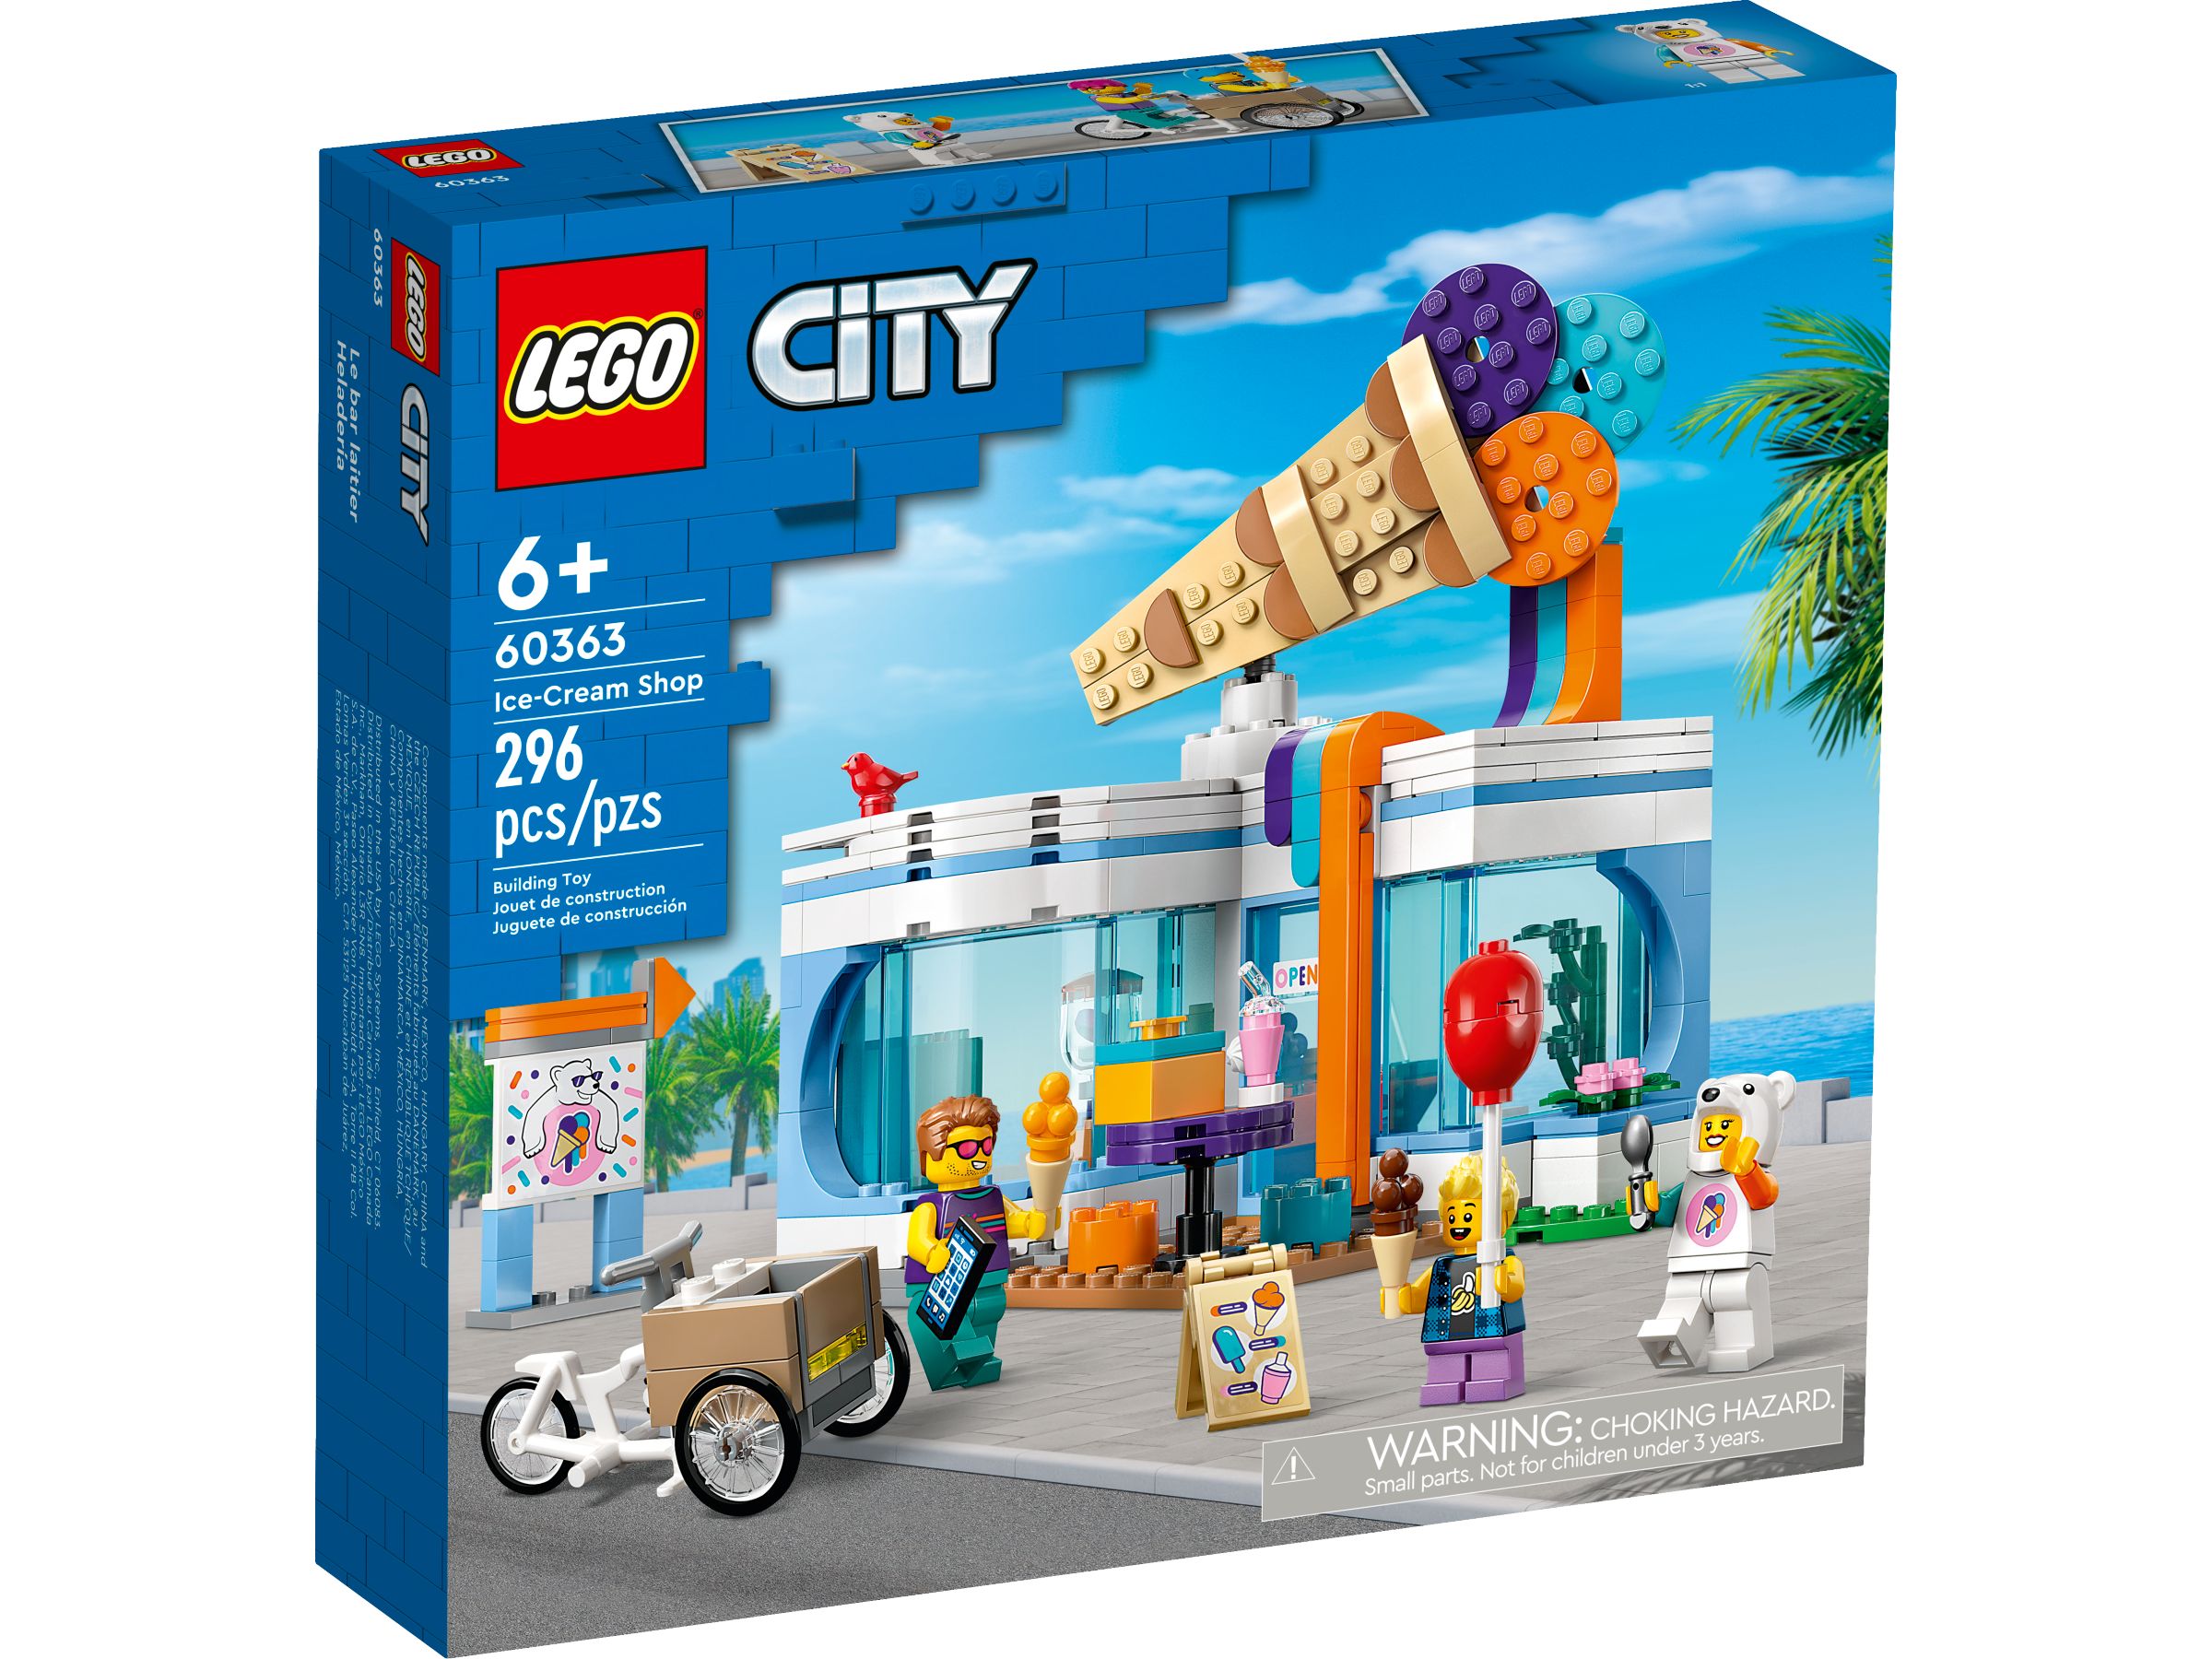 LEGO City 60363 Eisdiele LEGO_60363_Box1_v39.jpg